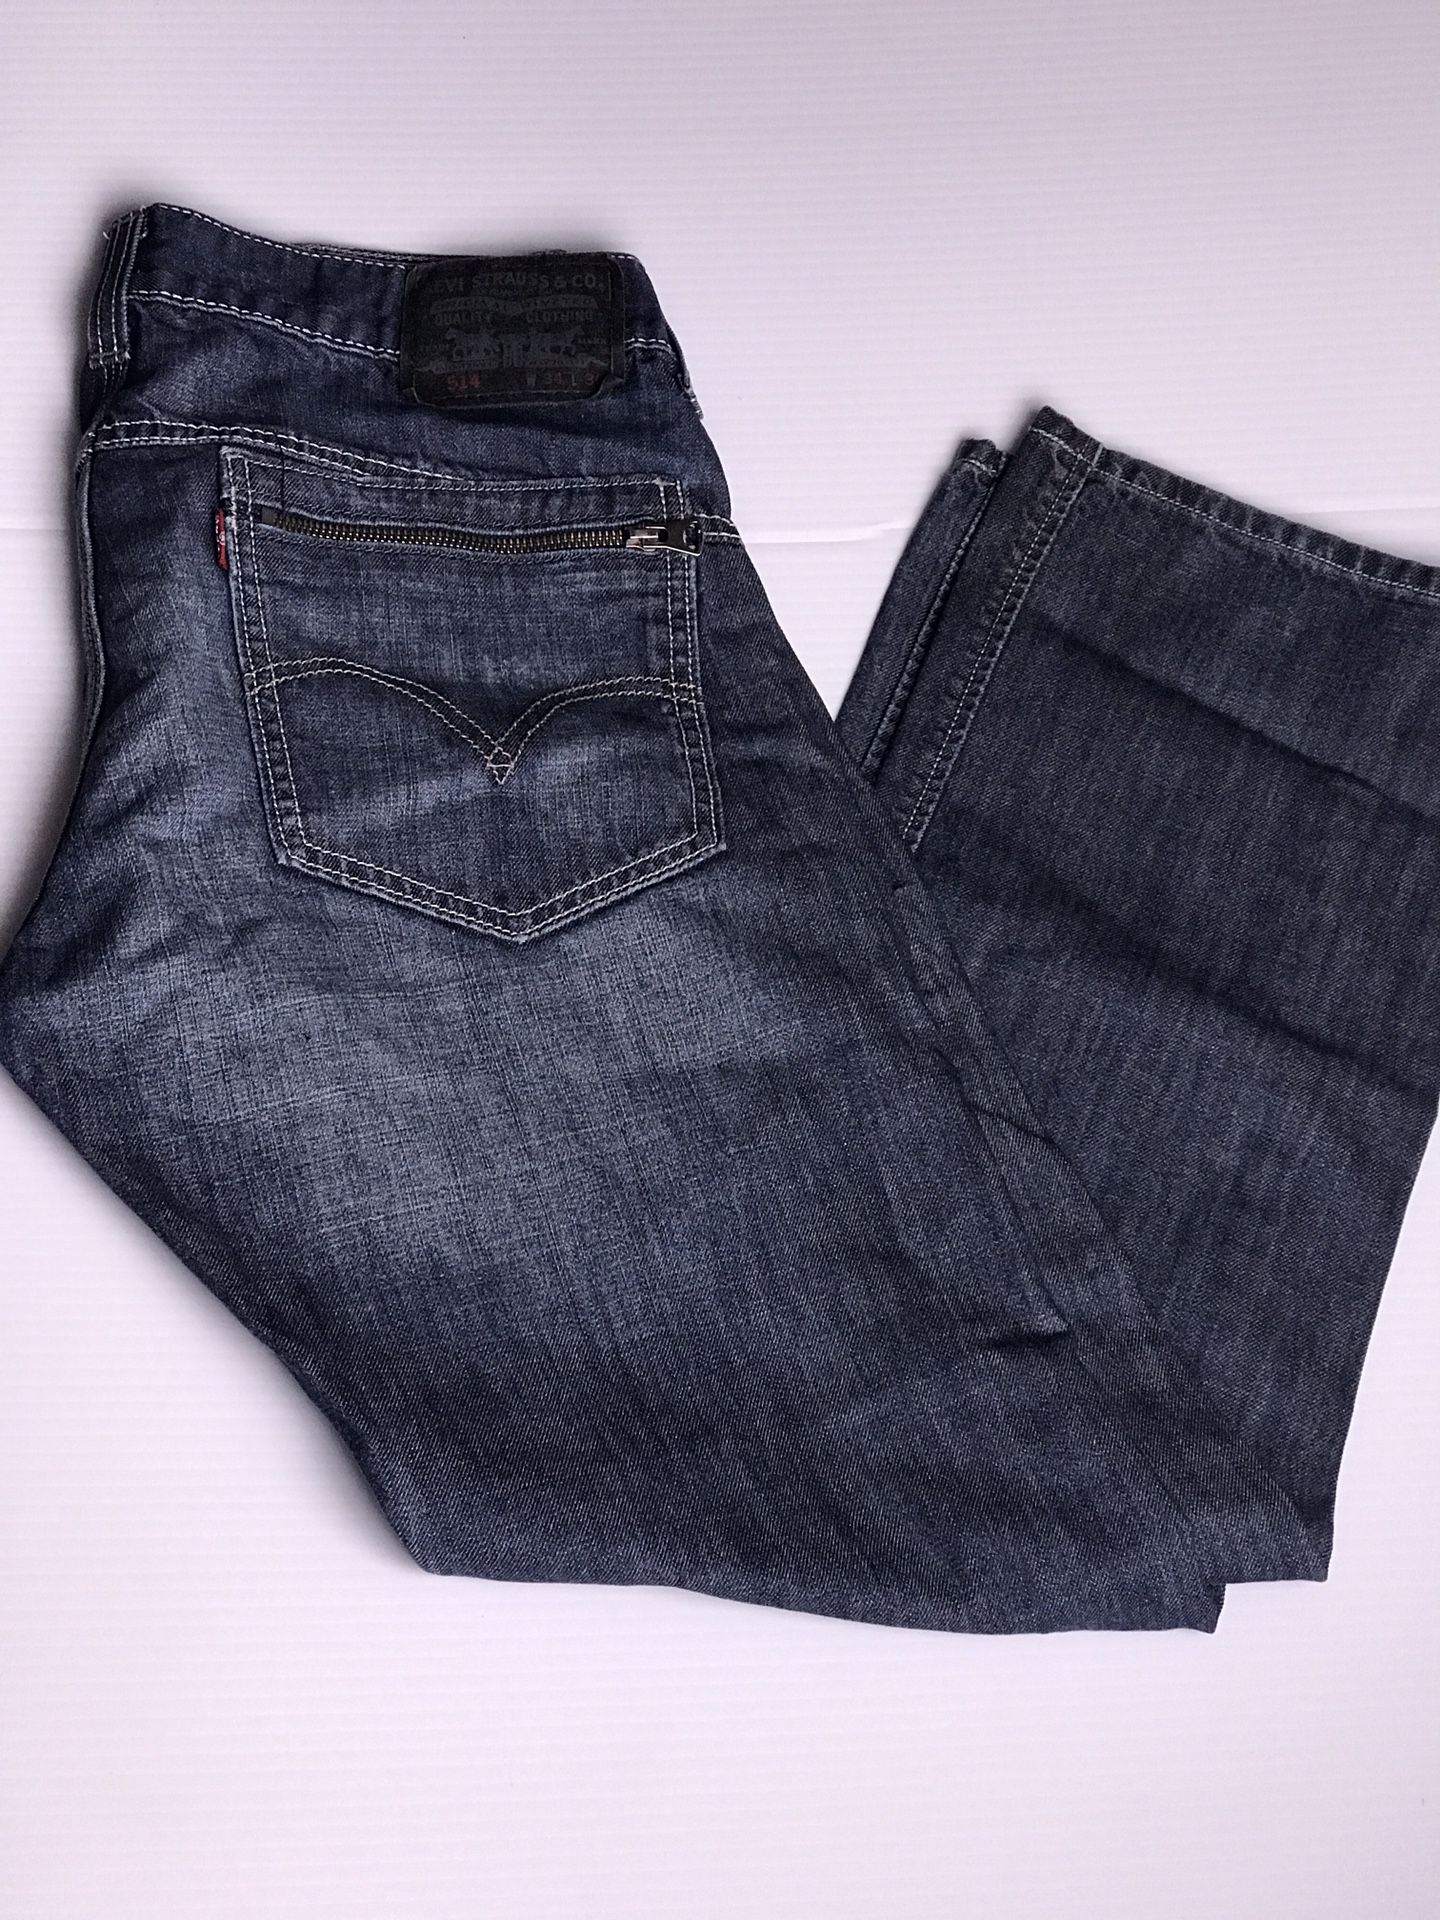 Levi’s Jeans 514 Slim Straight Men Jeans